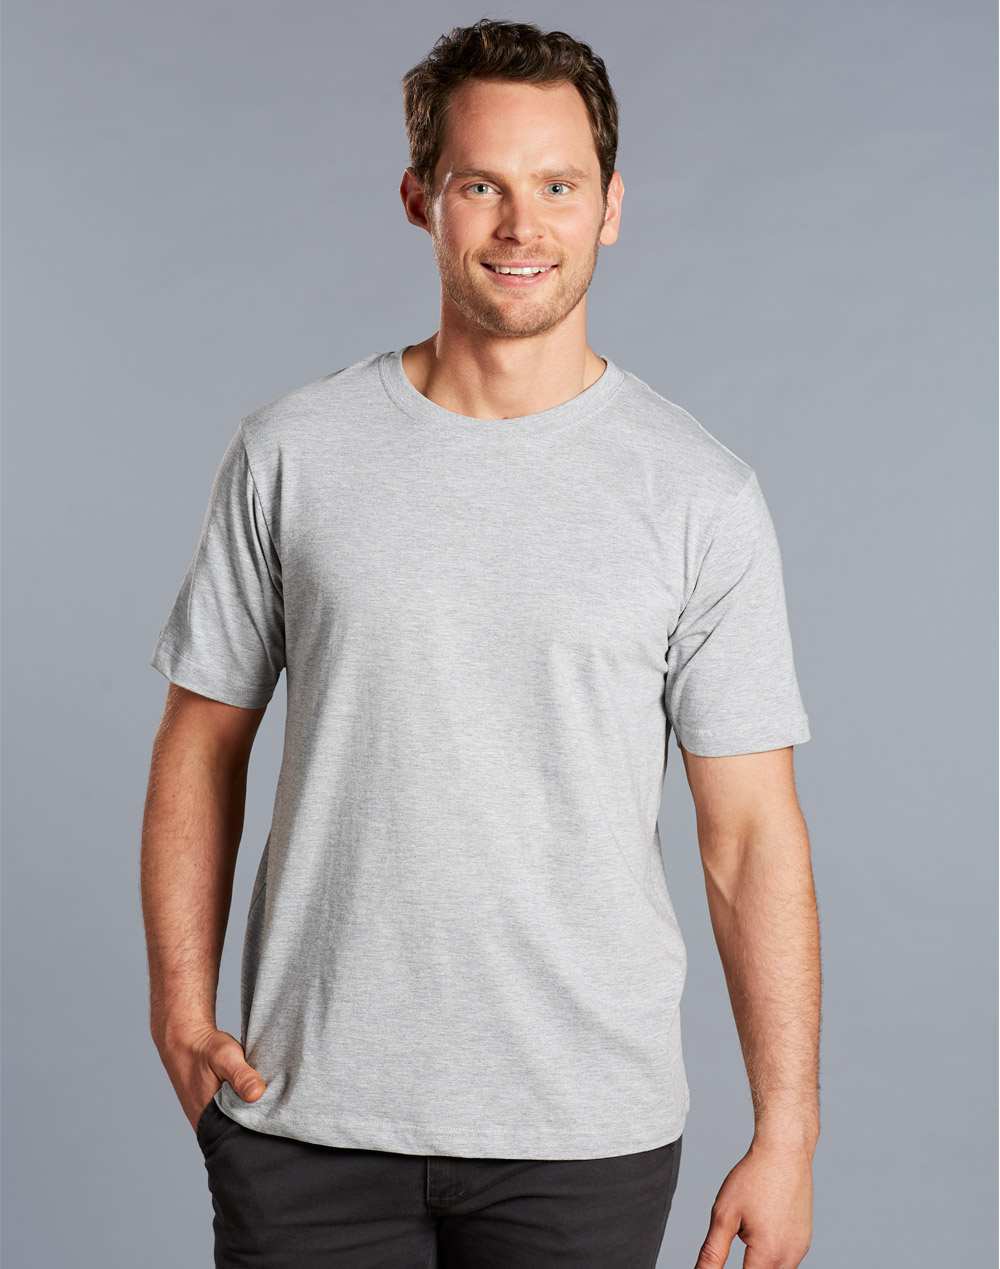 Custom Made Semi-Fitted T-Shirts Men's Online in Perh Australia